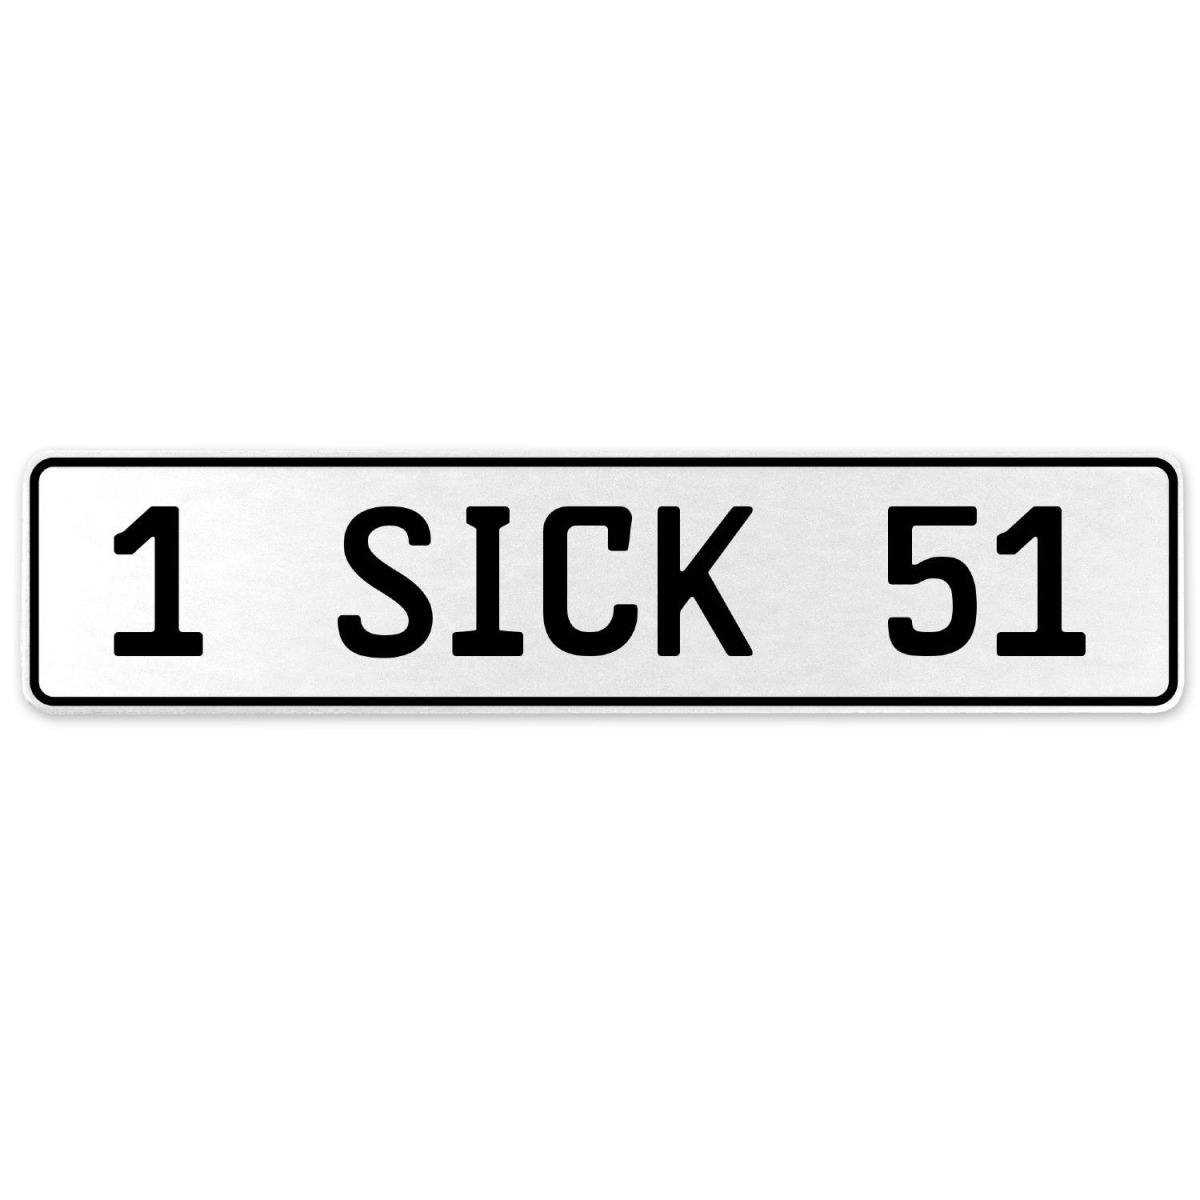 554450 1 Sick 51 - White Aluminum Street Sign Mancave Euro Plate Name Door Sign Wall